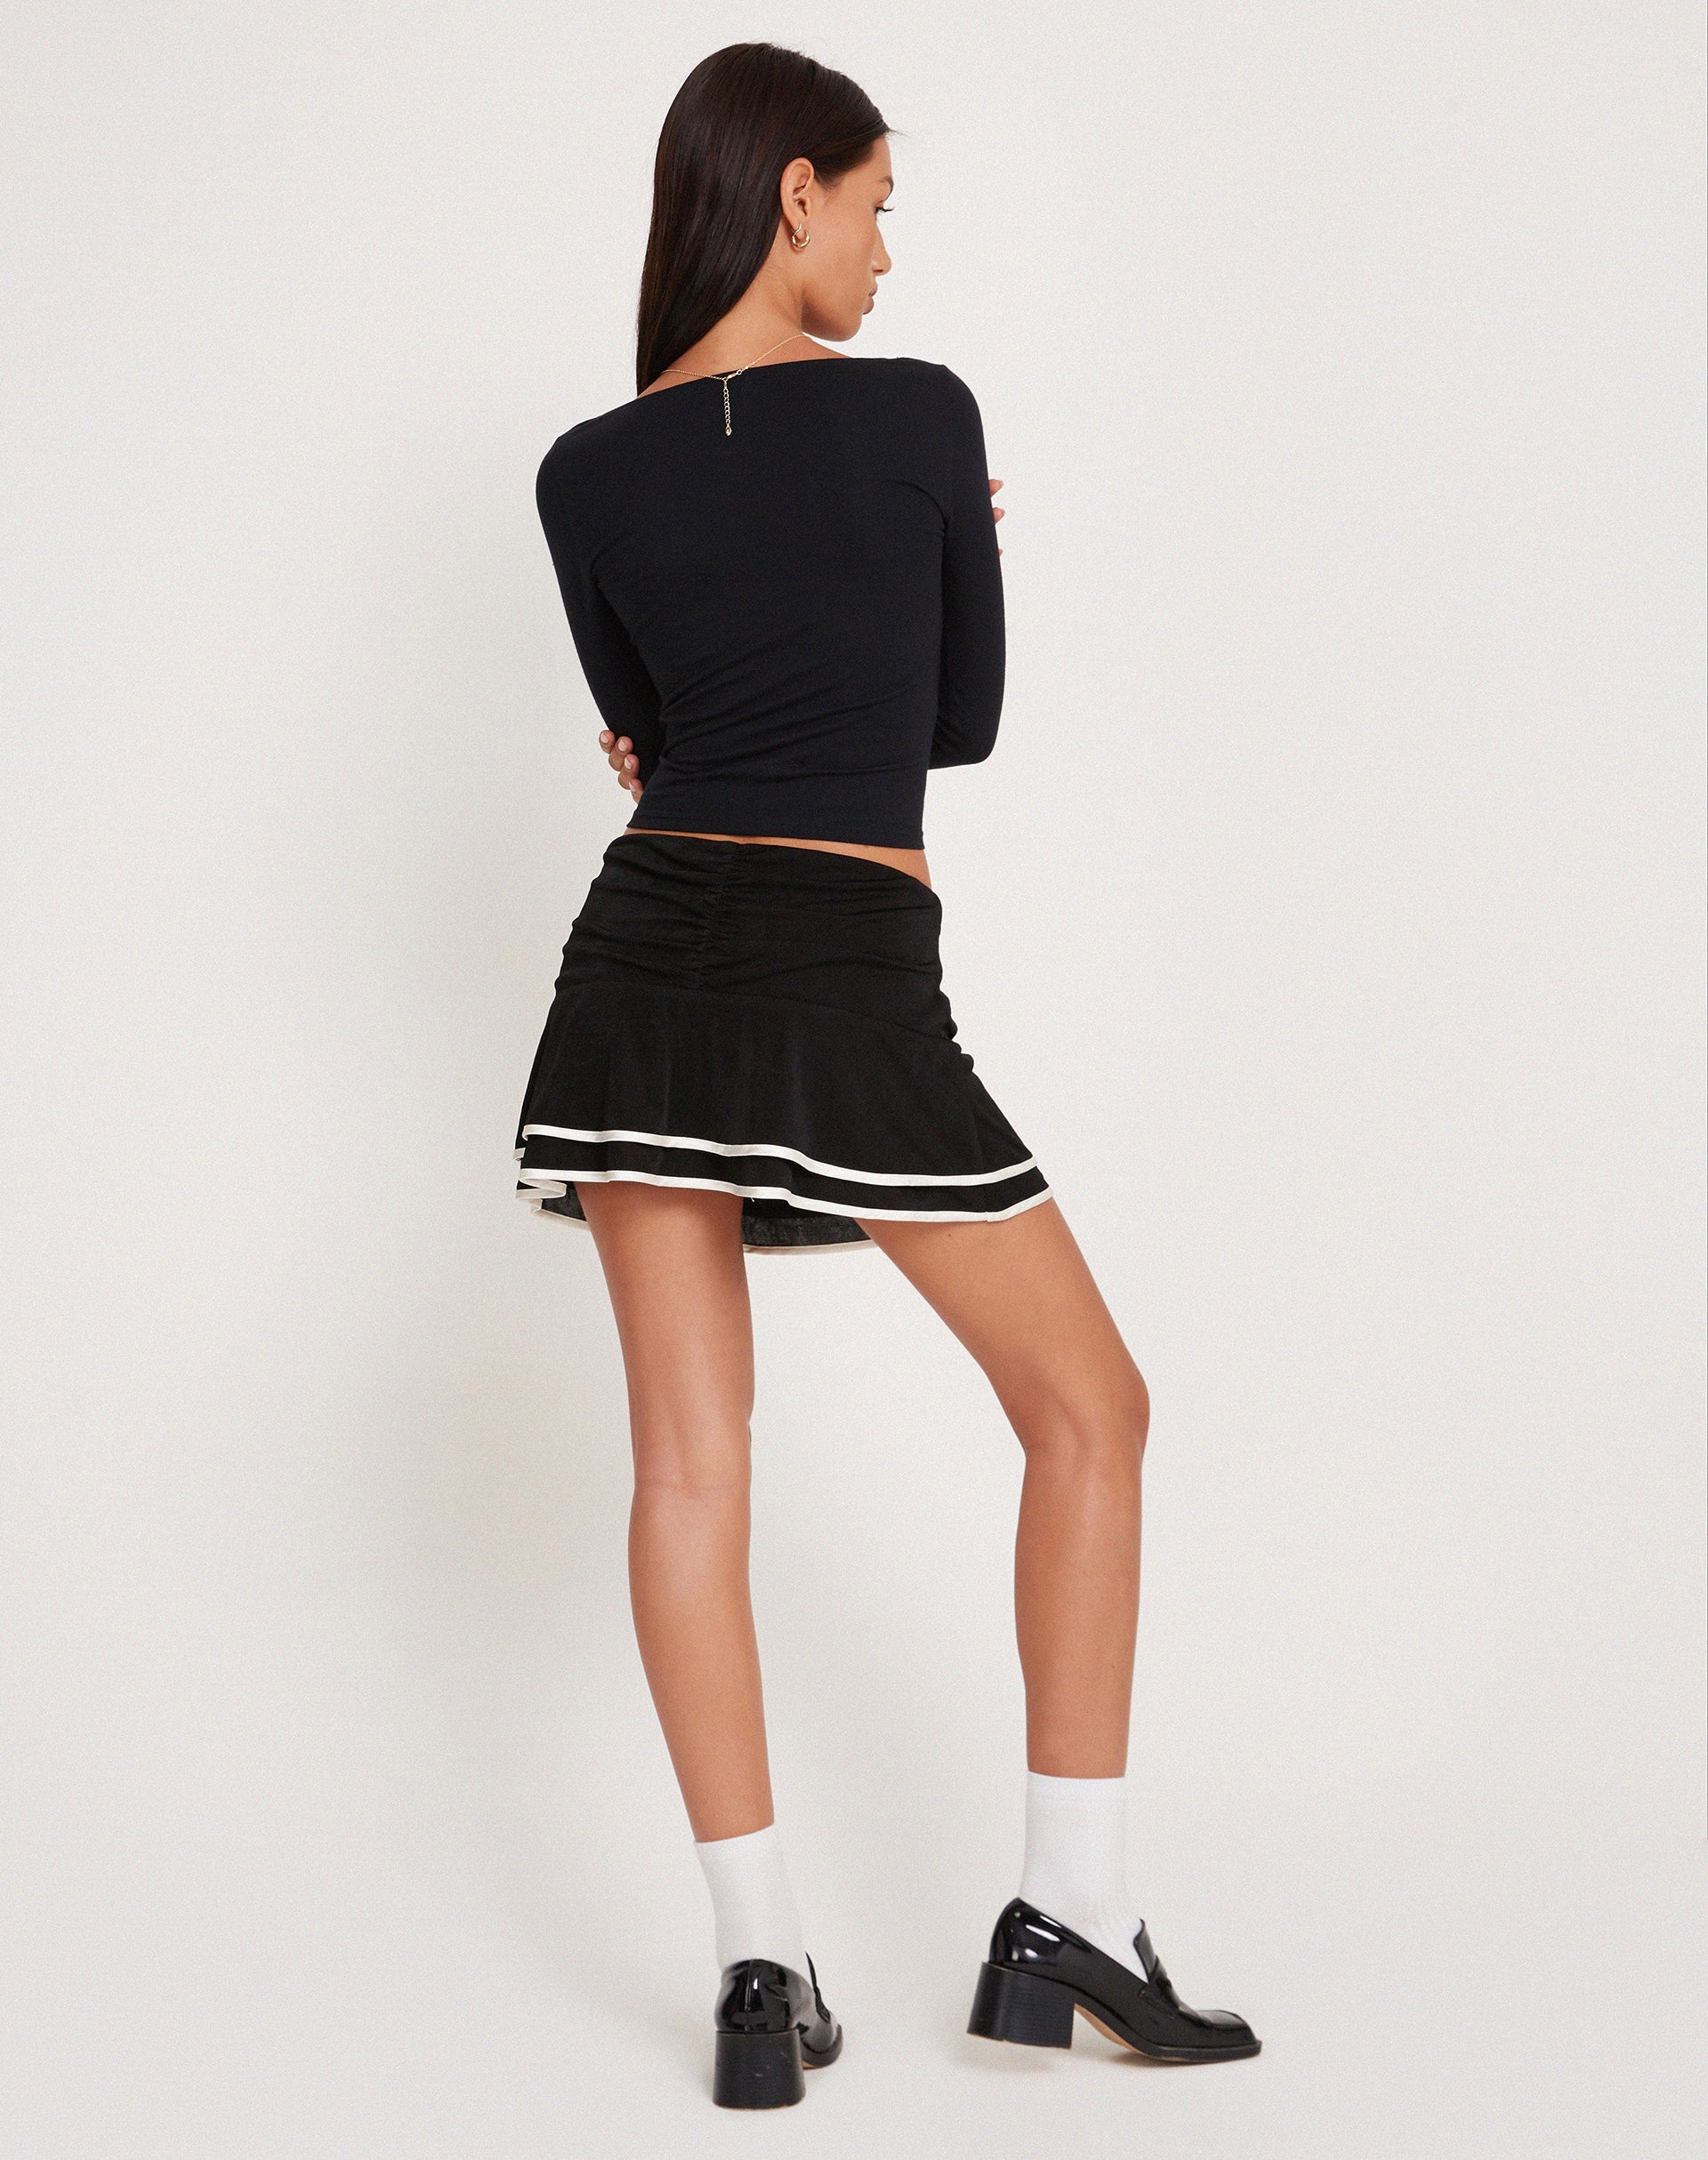 Image of Ranta Mini Skirt in Black with Ivory Binding